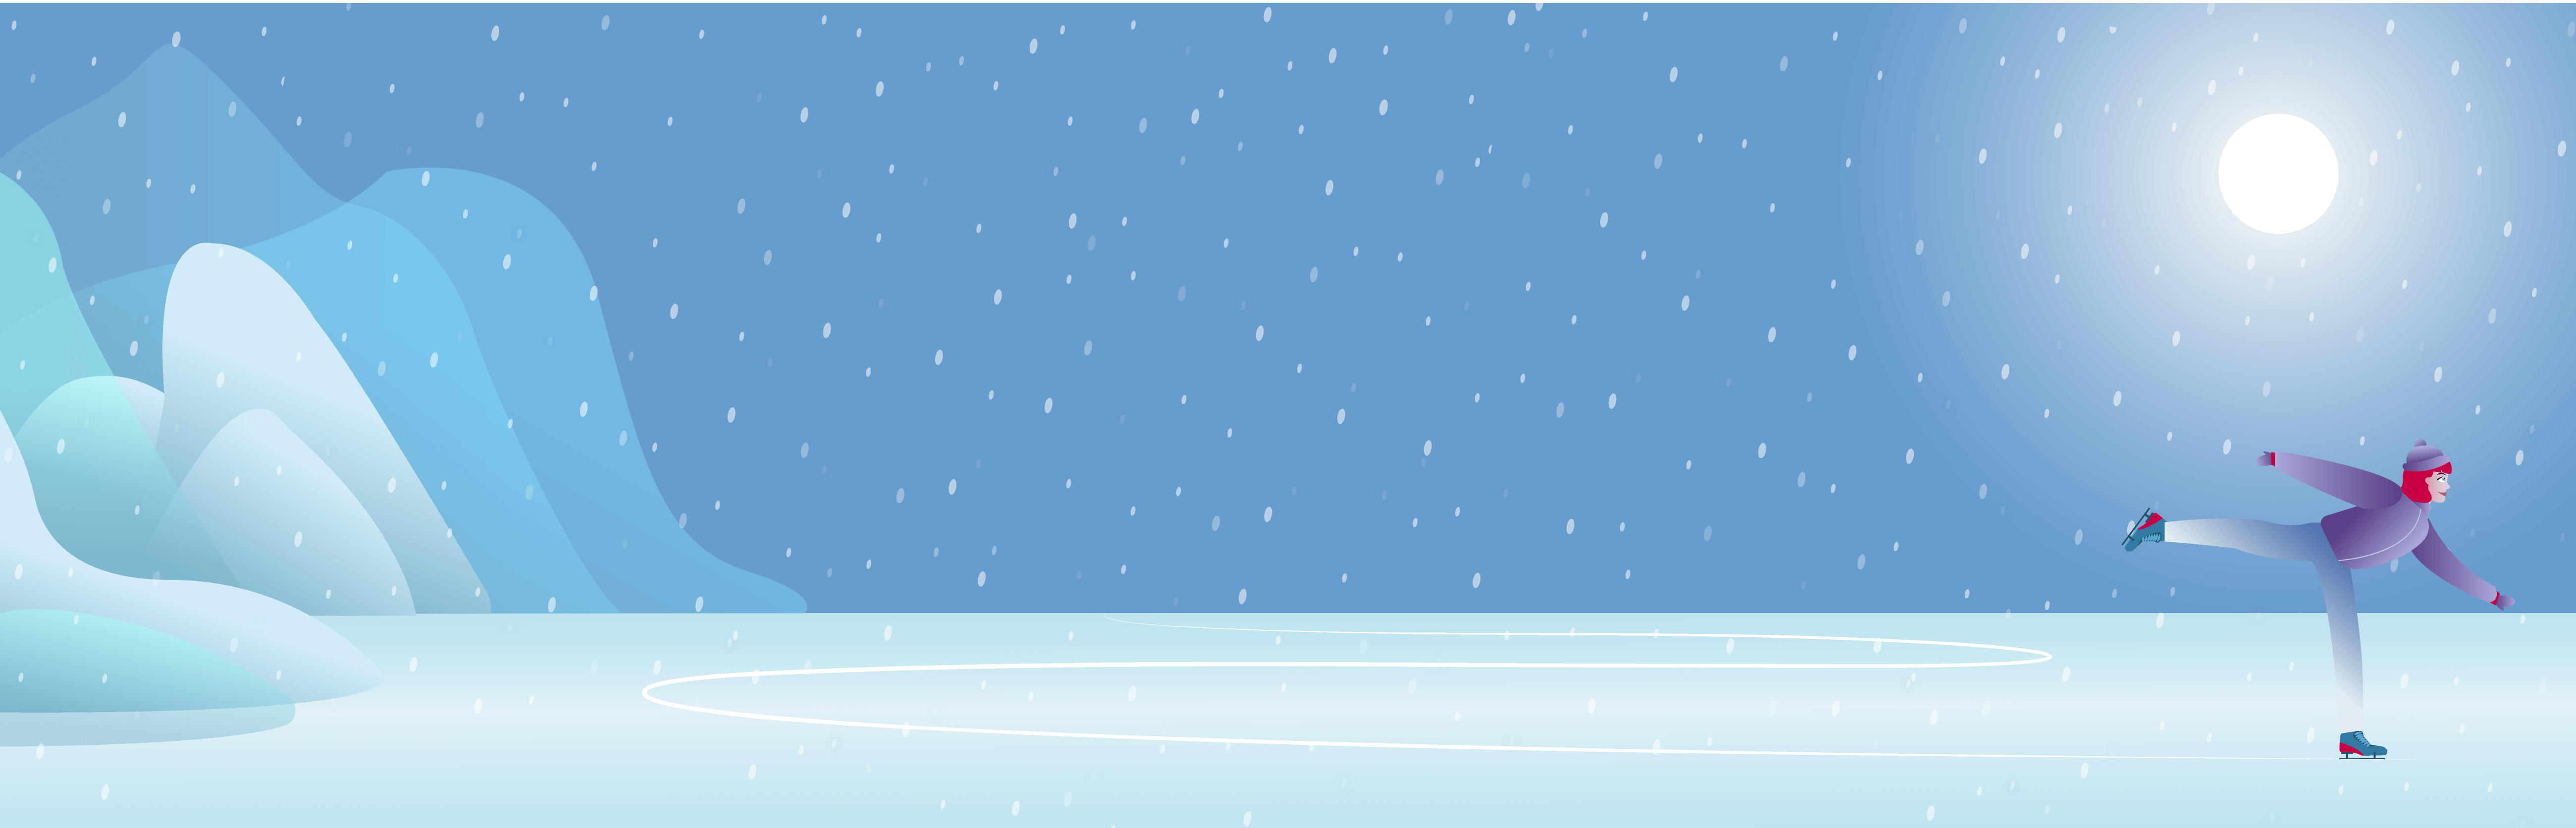 Christmas portal background - ice skating scene